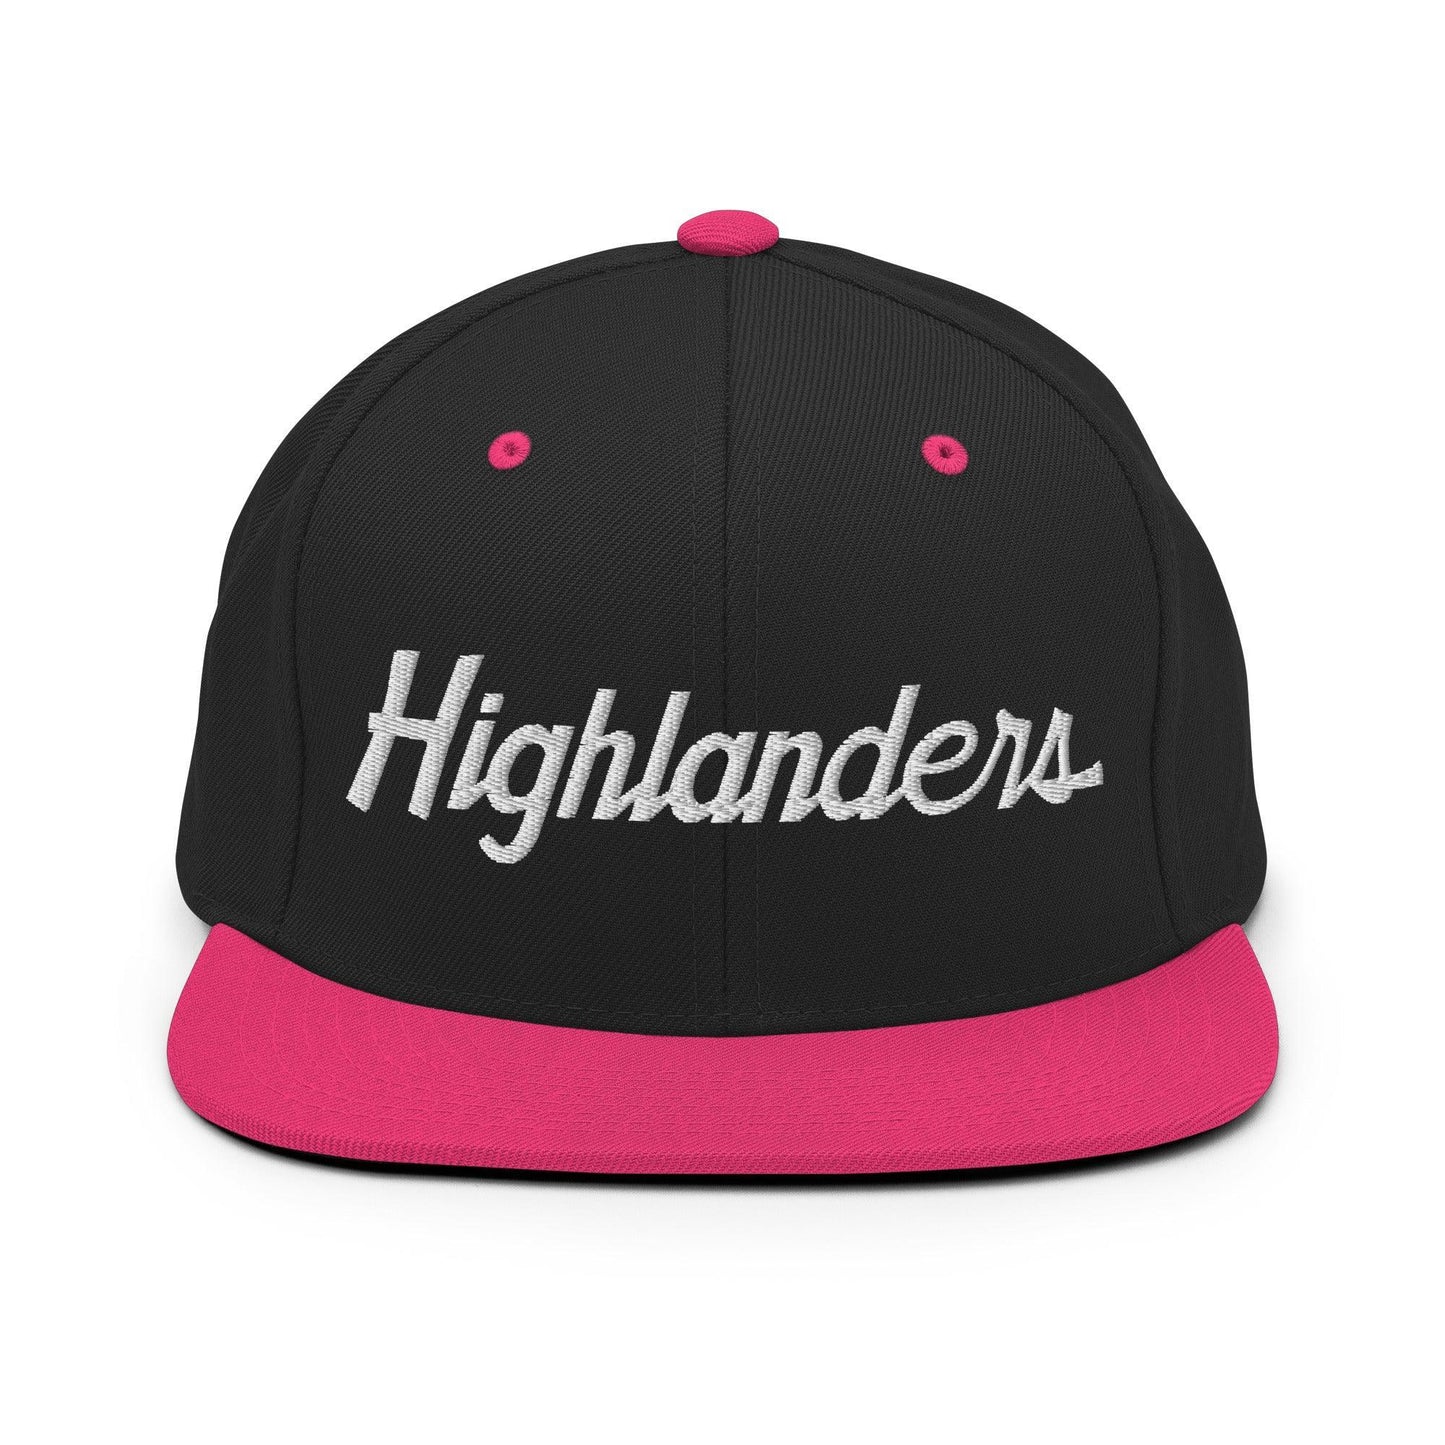 Highlanders School Mascot Script Snapback Hat Black Neon Pink